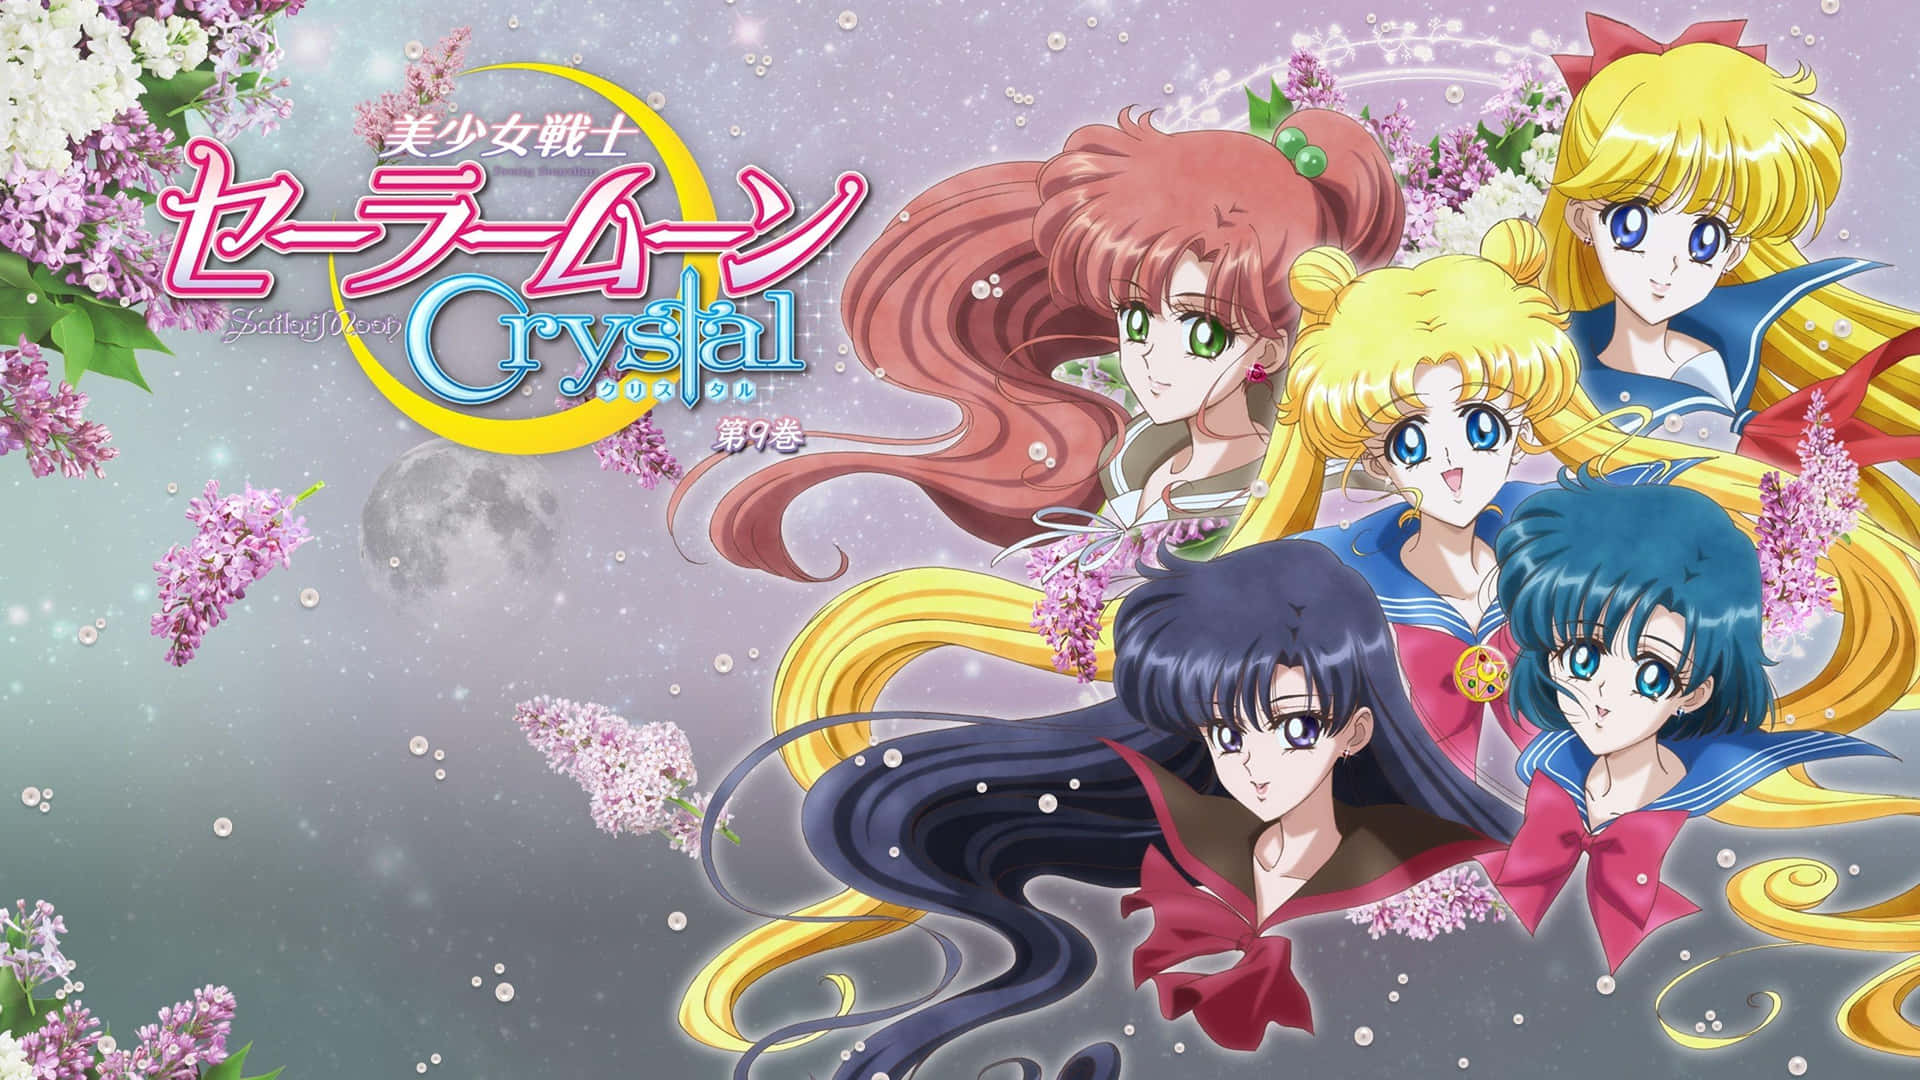 Free Sailor Moon Crystal Wallpaper Downloads, [100+] Sailor Moon Crystal  Wallpapers for FREE 